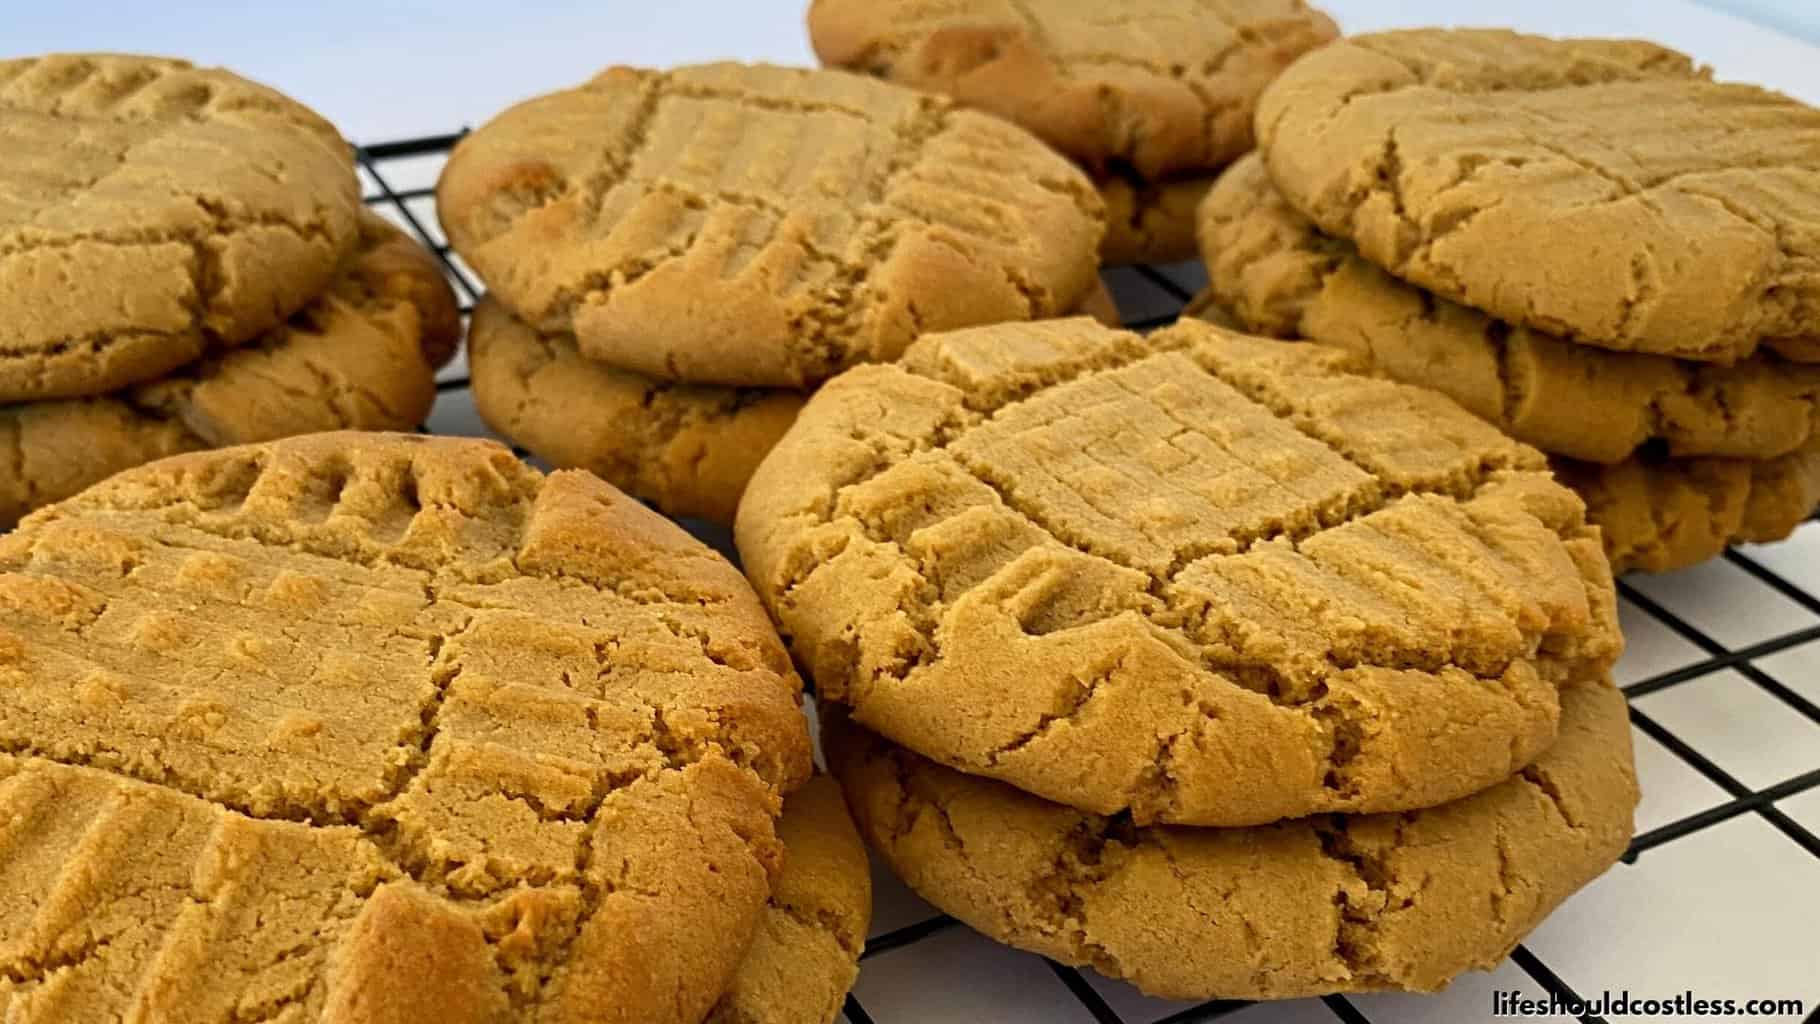 https://lifeshouldcostless.com/wp-content/uploads/2023/02/grandmas-old-fashioned-peanut-butter-cookies-recipe.jpg